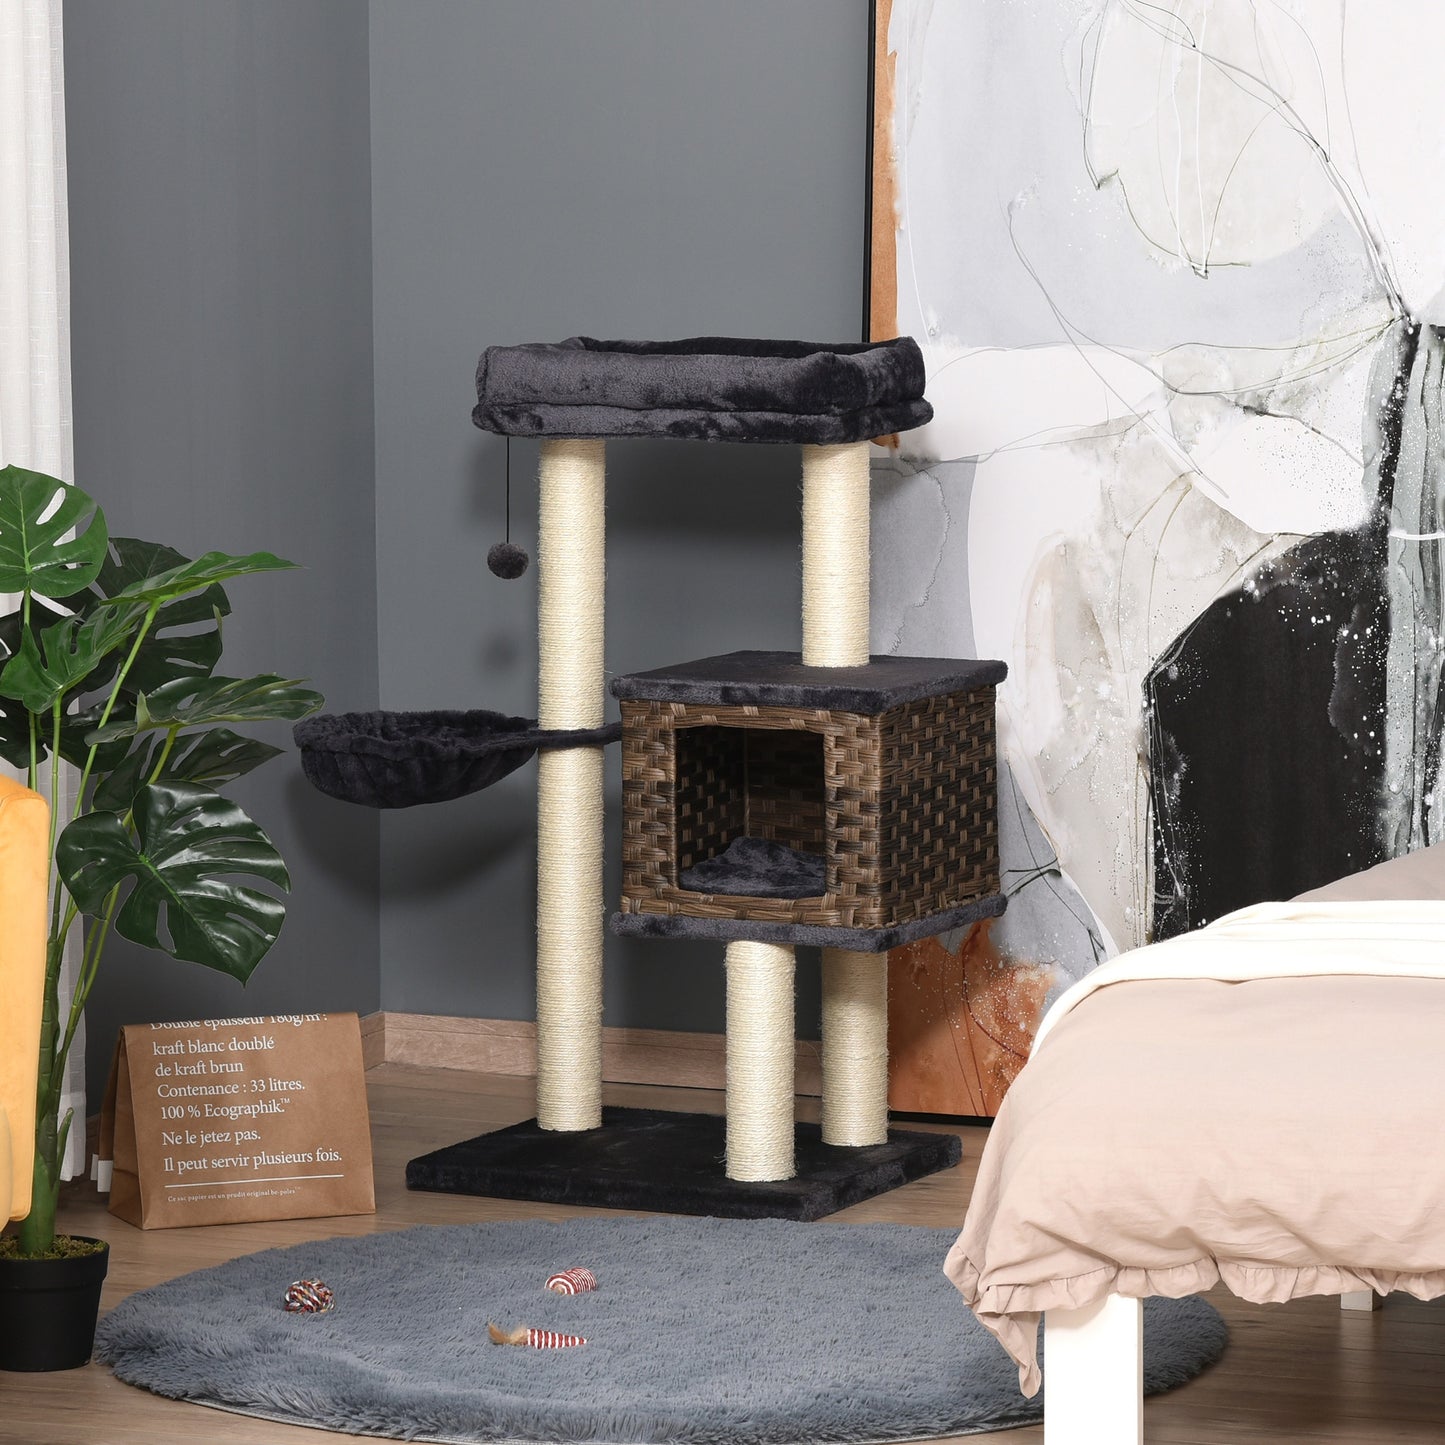 PawHut Cat Tree Tower w/ Sisal Posts Condo Hanging Ball Cushion Perch PE Rattan